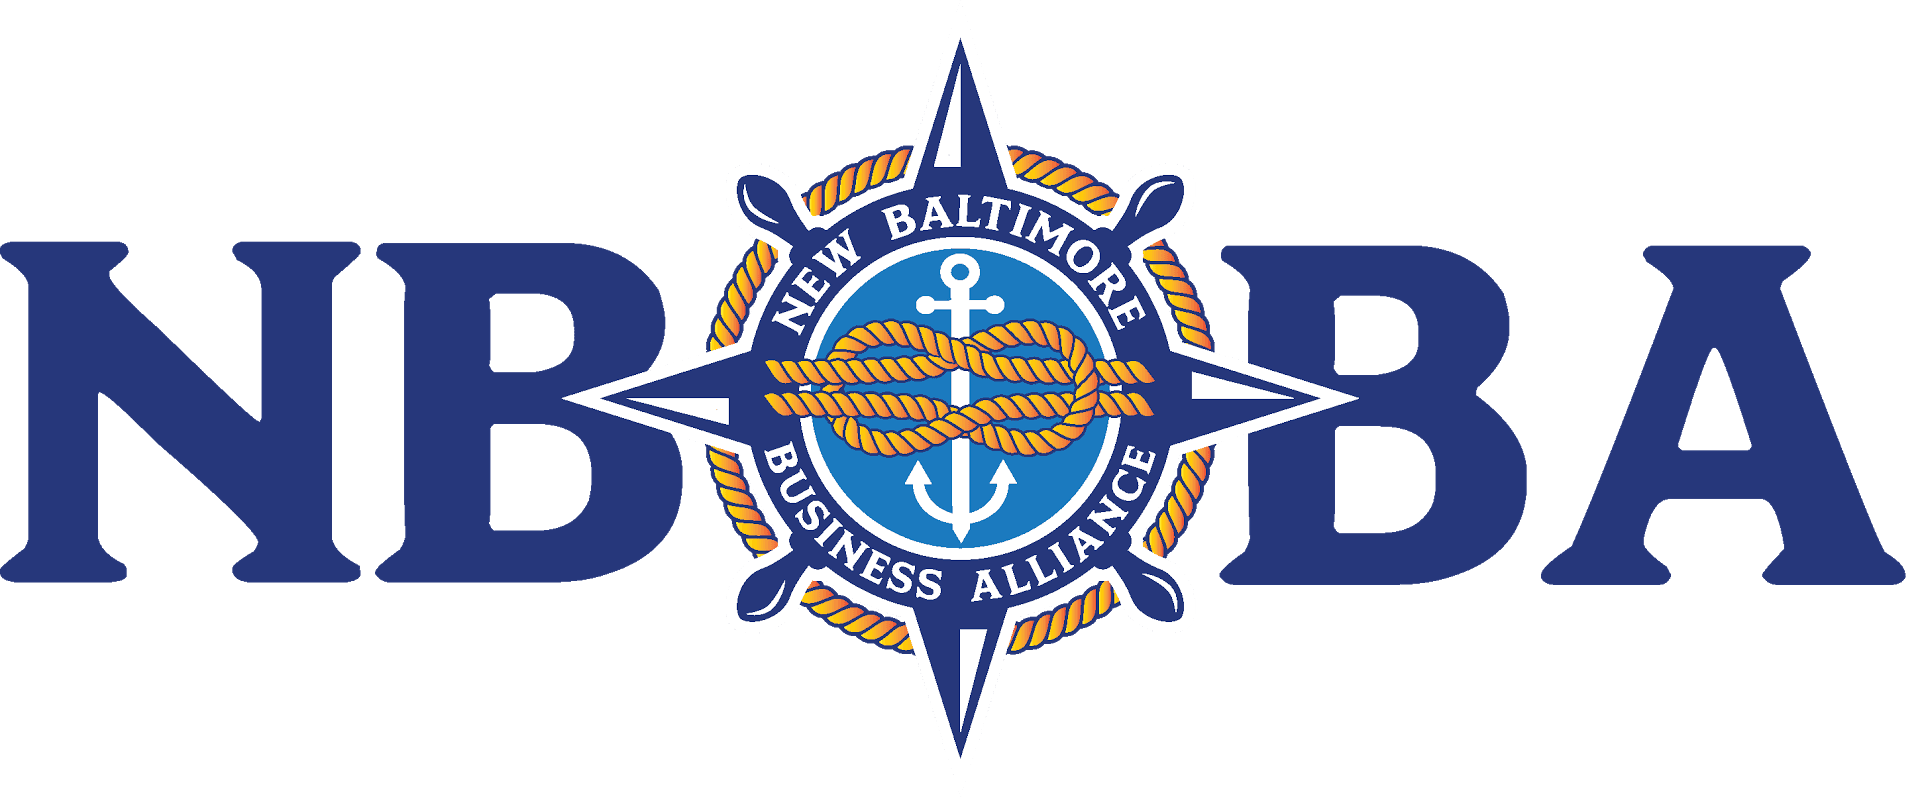 New Baltimore Business Association